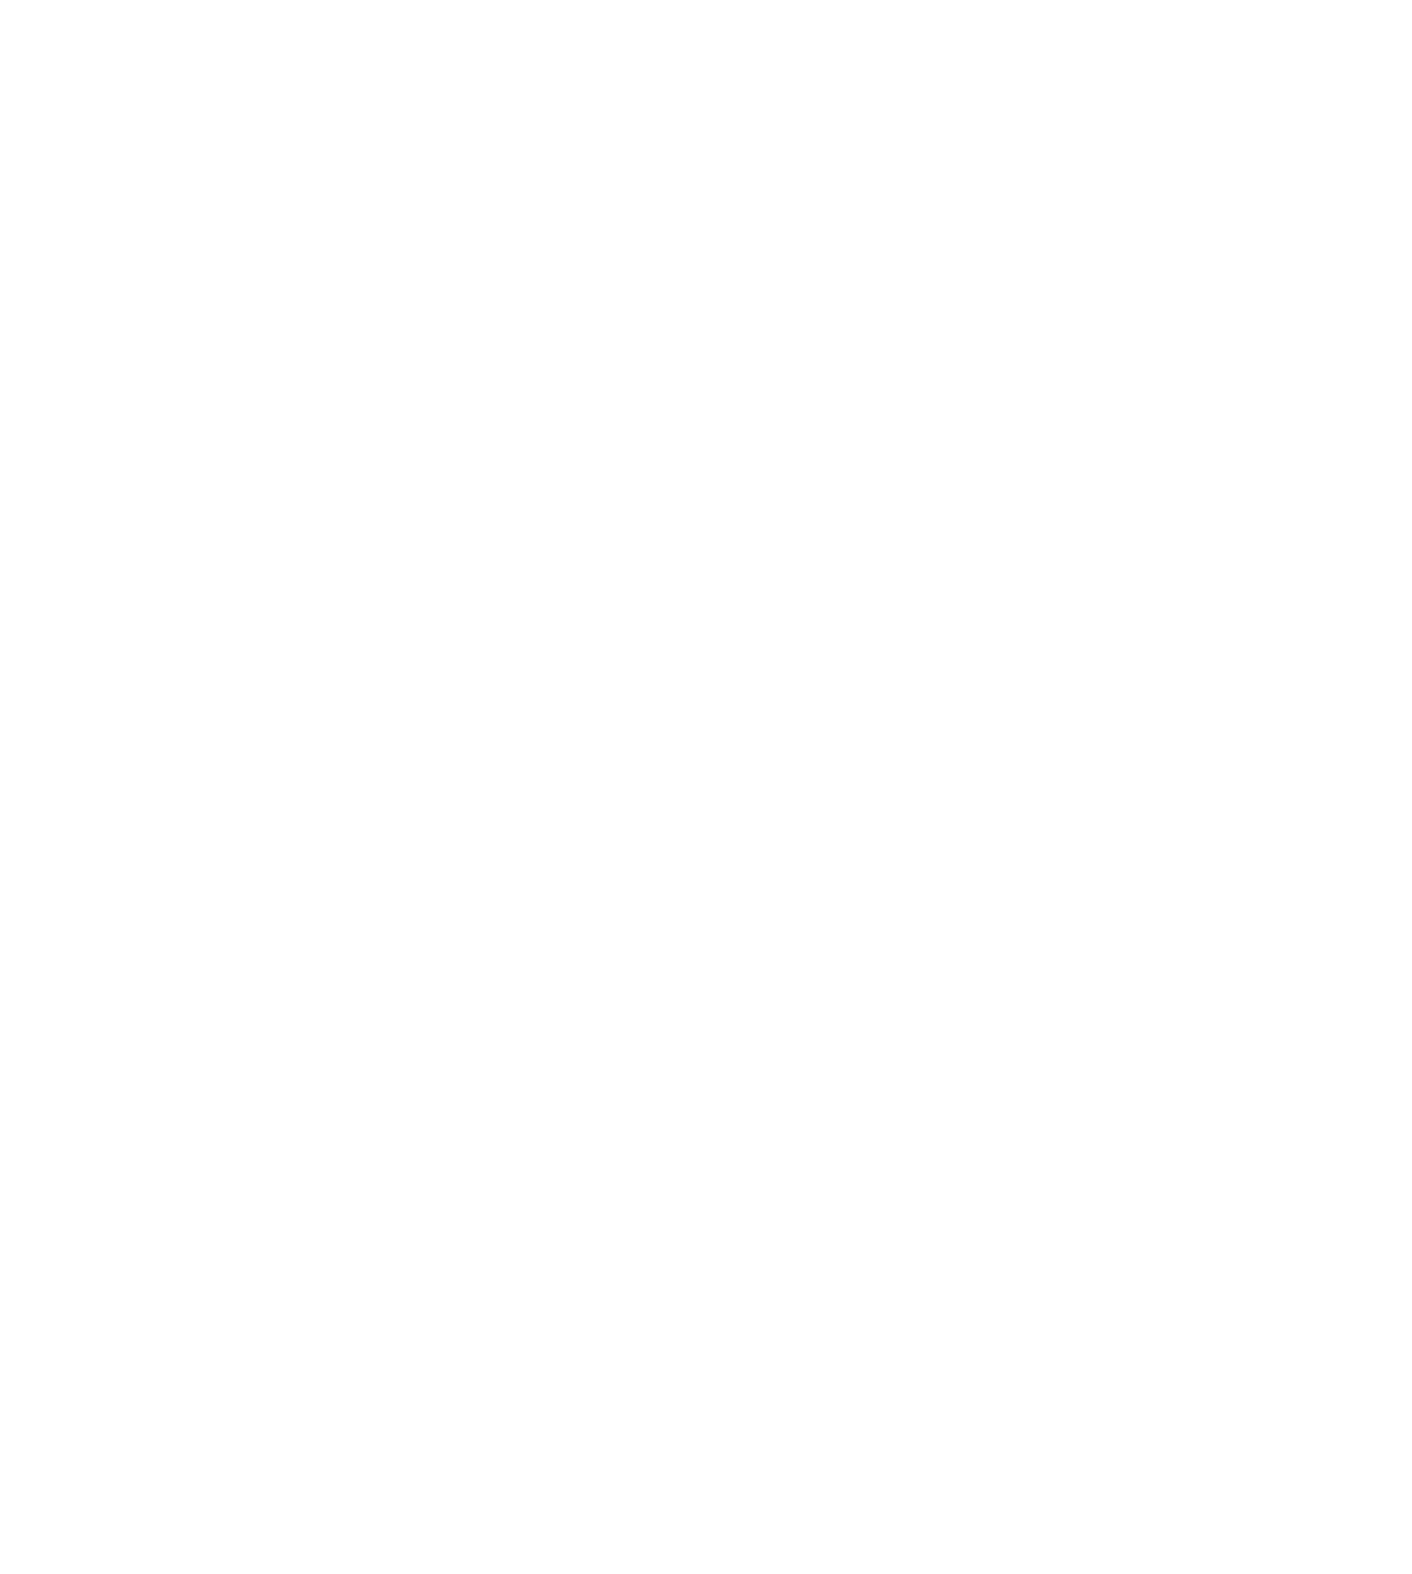 STAG Industrial logo for dark backgrounds (transparent PNG)